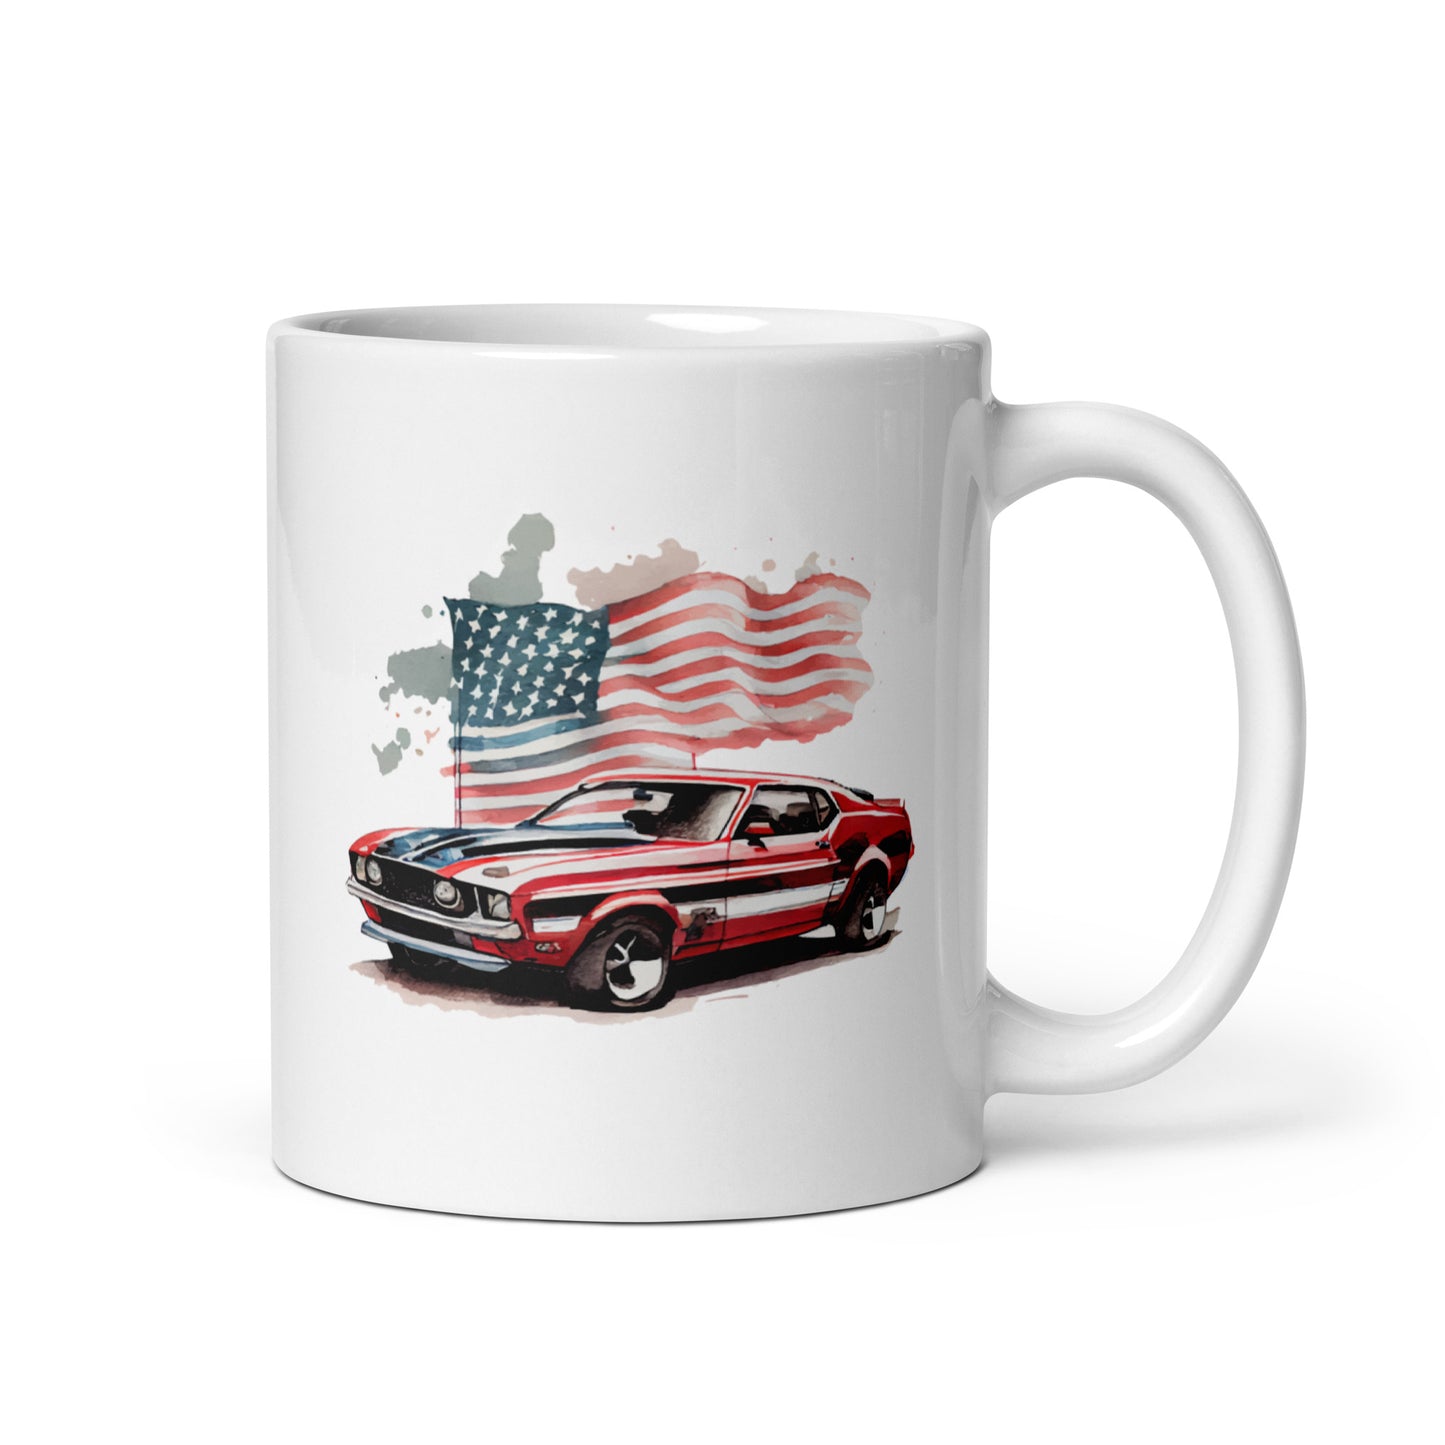 American muscle car, Patriotic design, Watercolor illustration, USA flag art - White glossy mug